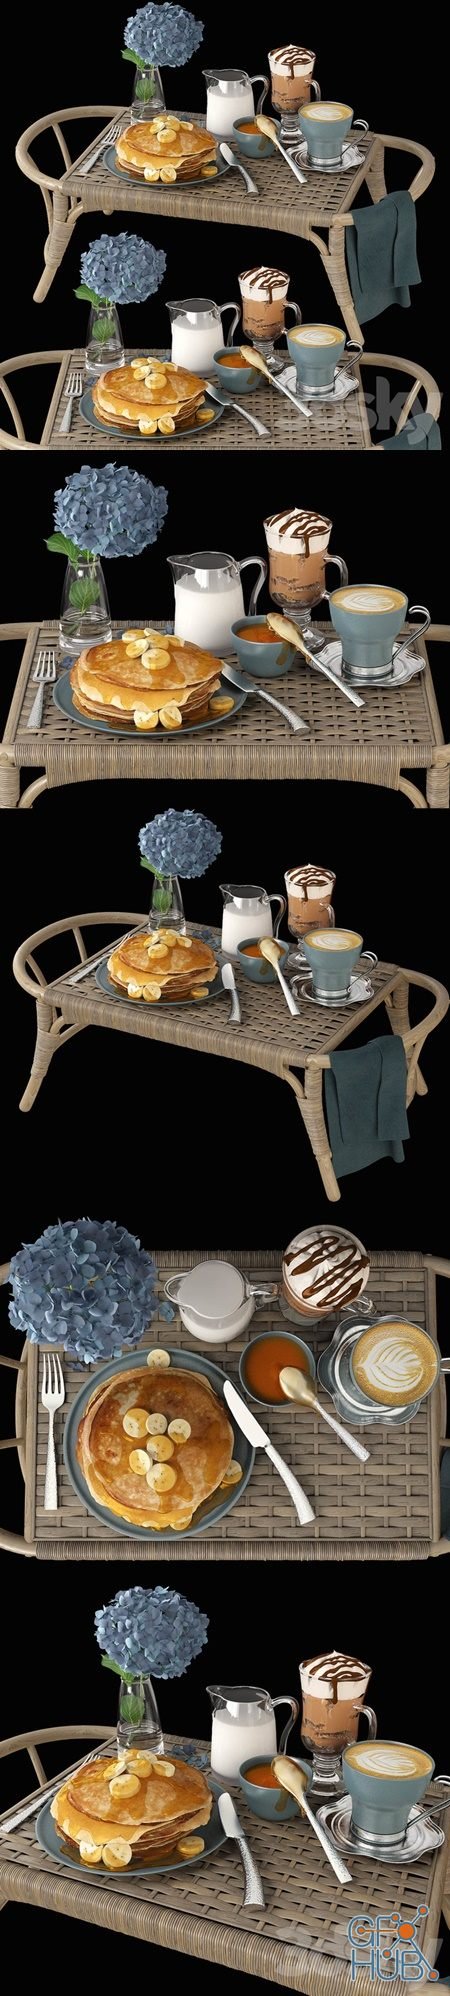 Decorative set of breakfast in bed